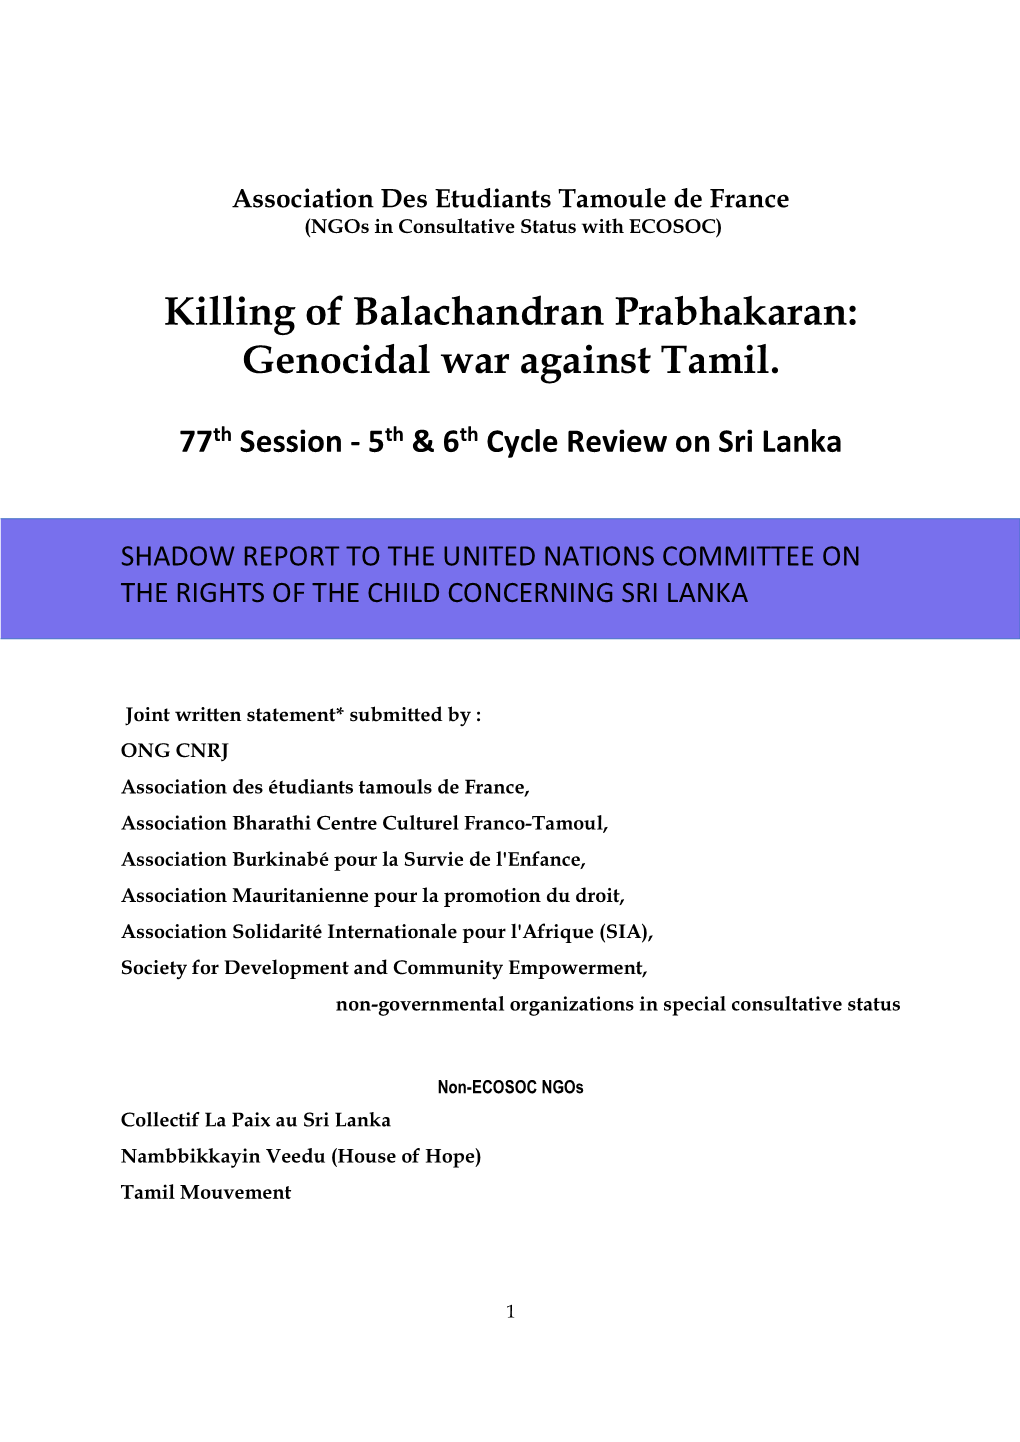 Killing of Balachandran Prabhakaran: Genocidal War Against Tamil